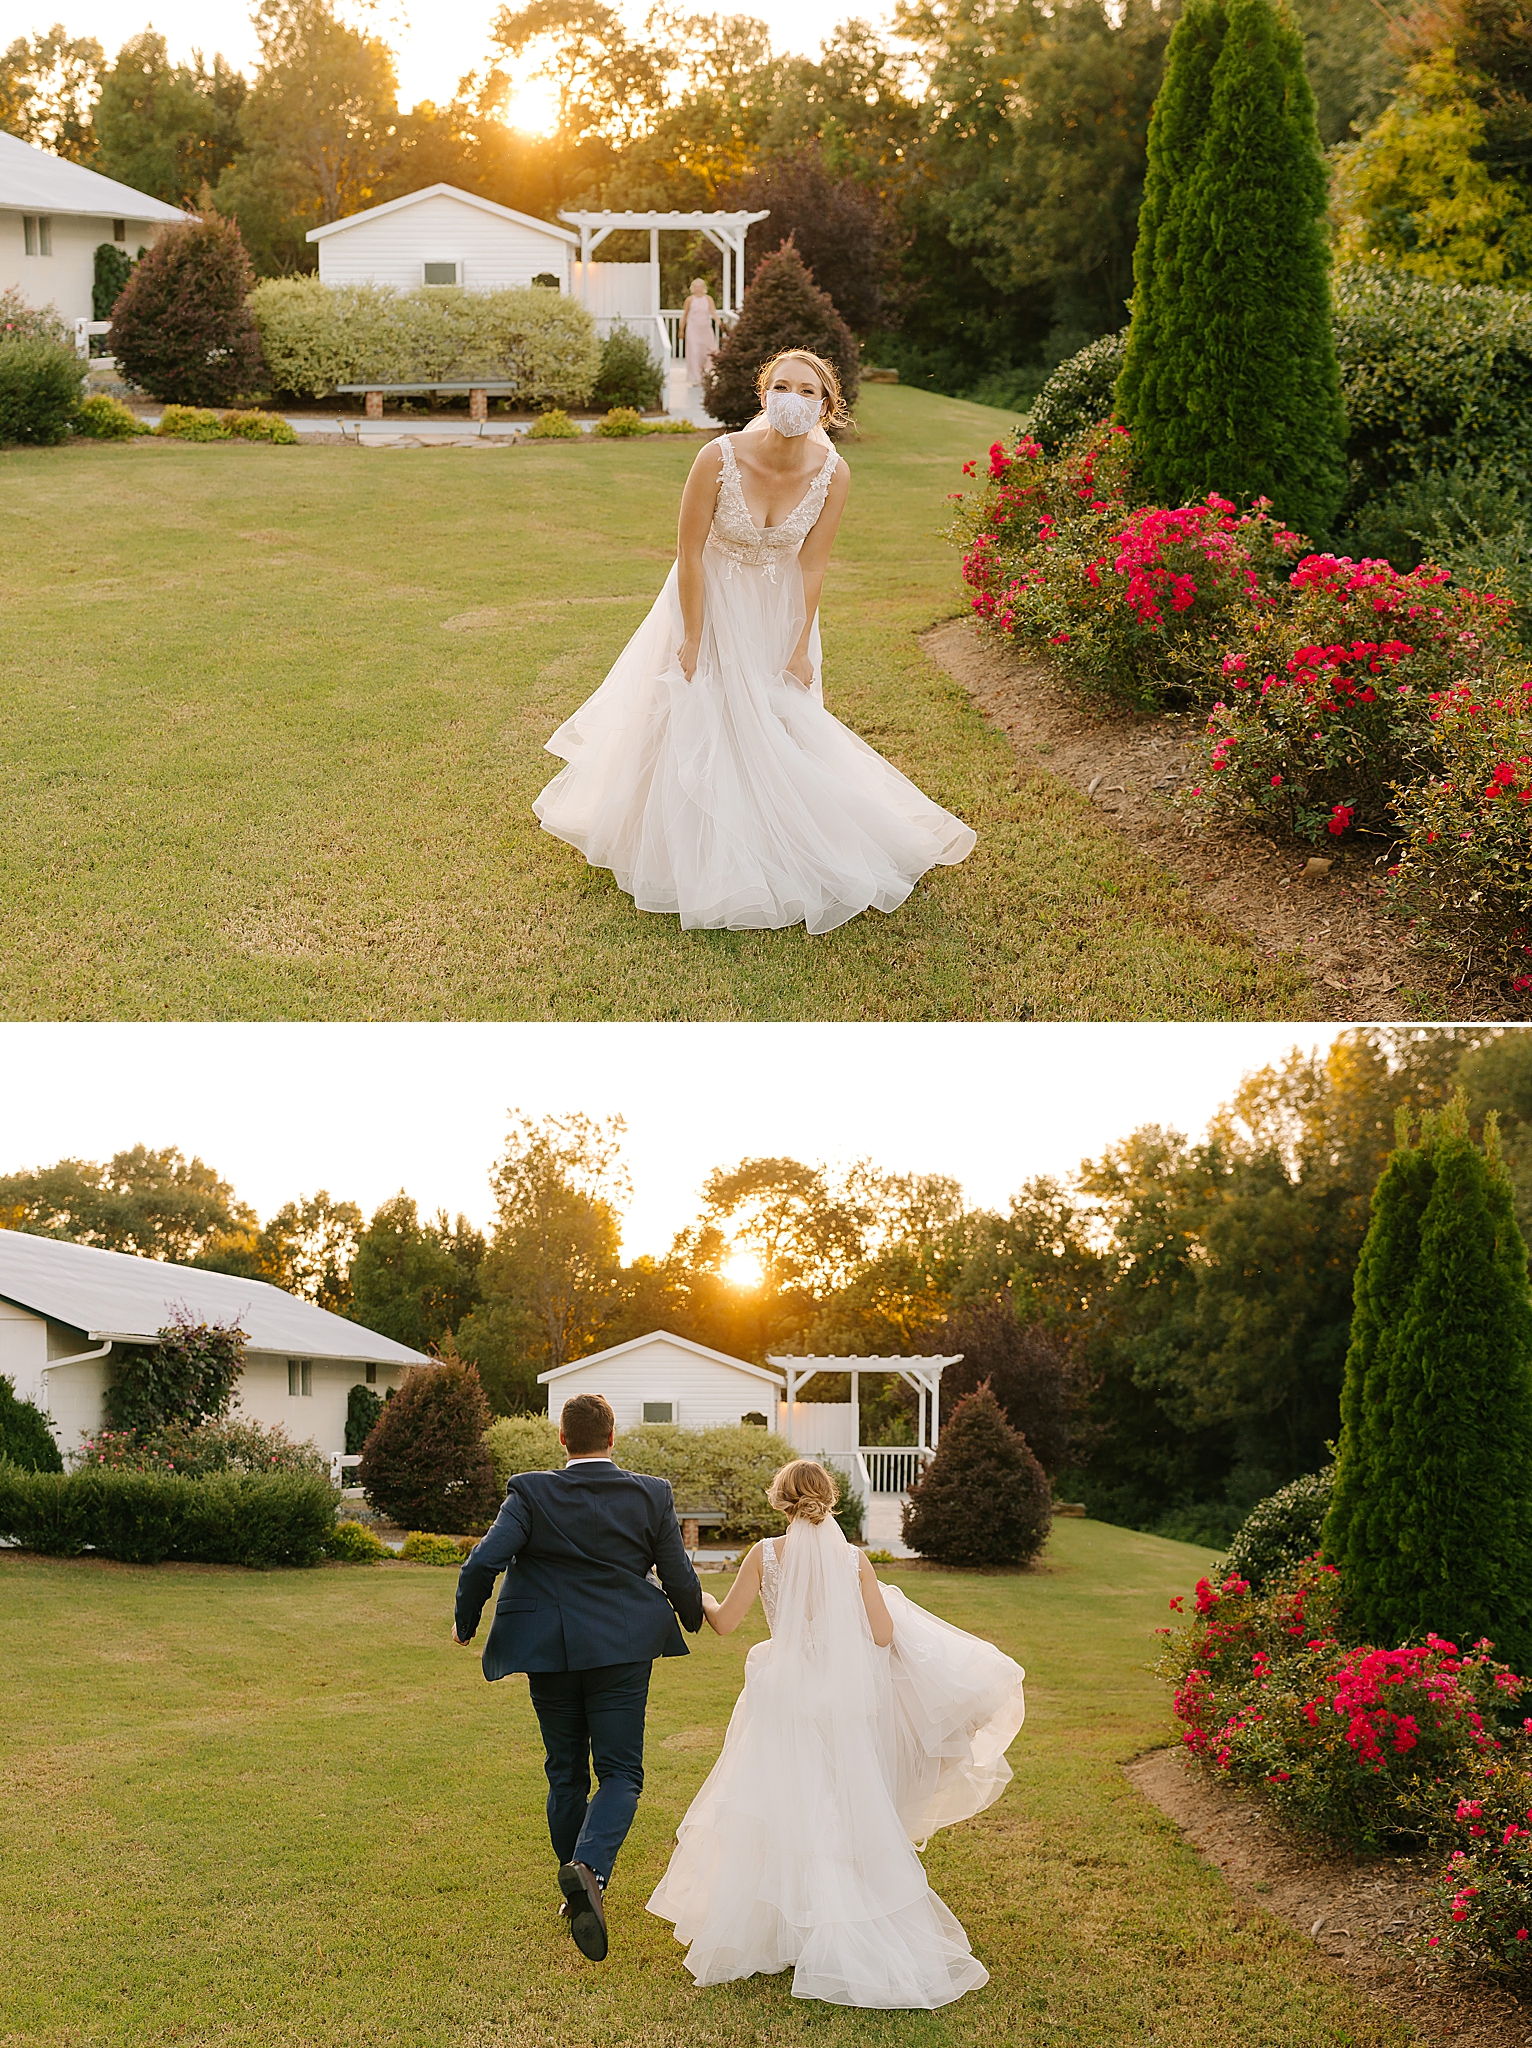 North Carolina sunset wedding portraits of bride and groom